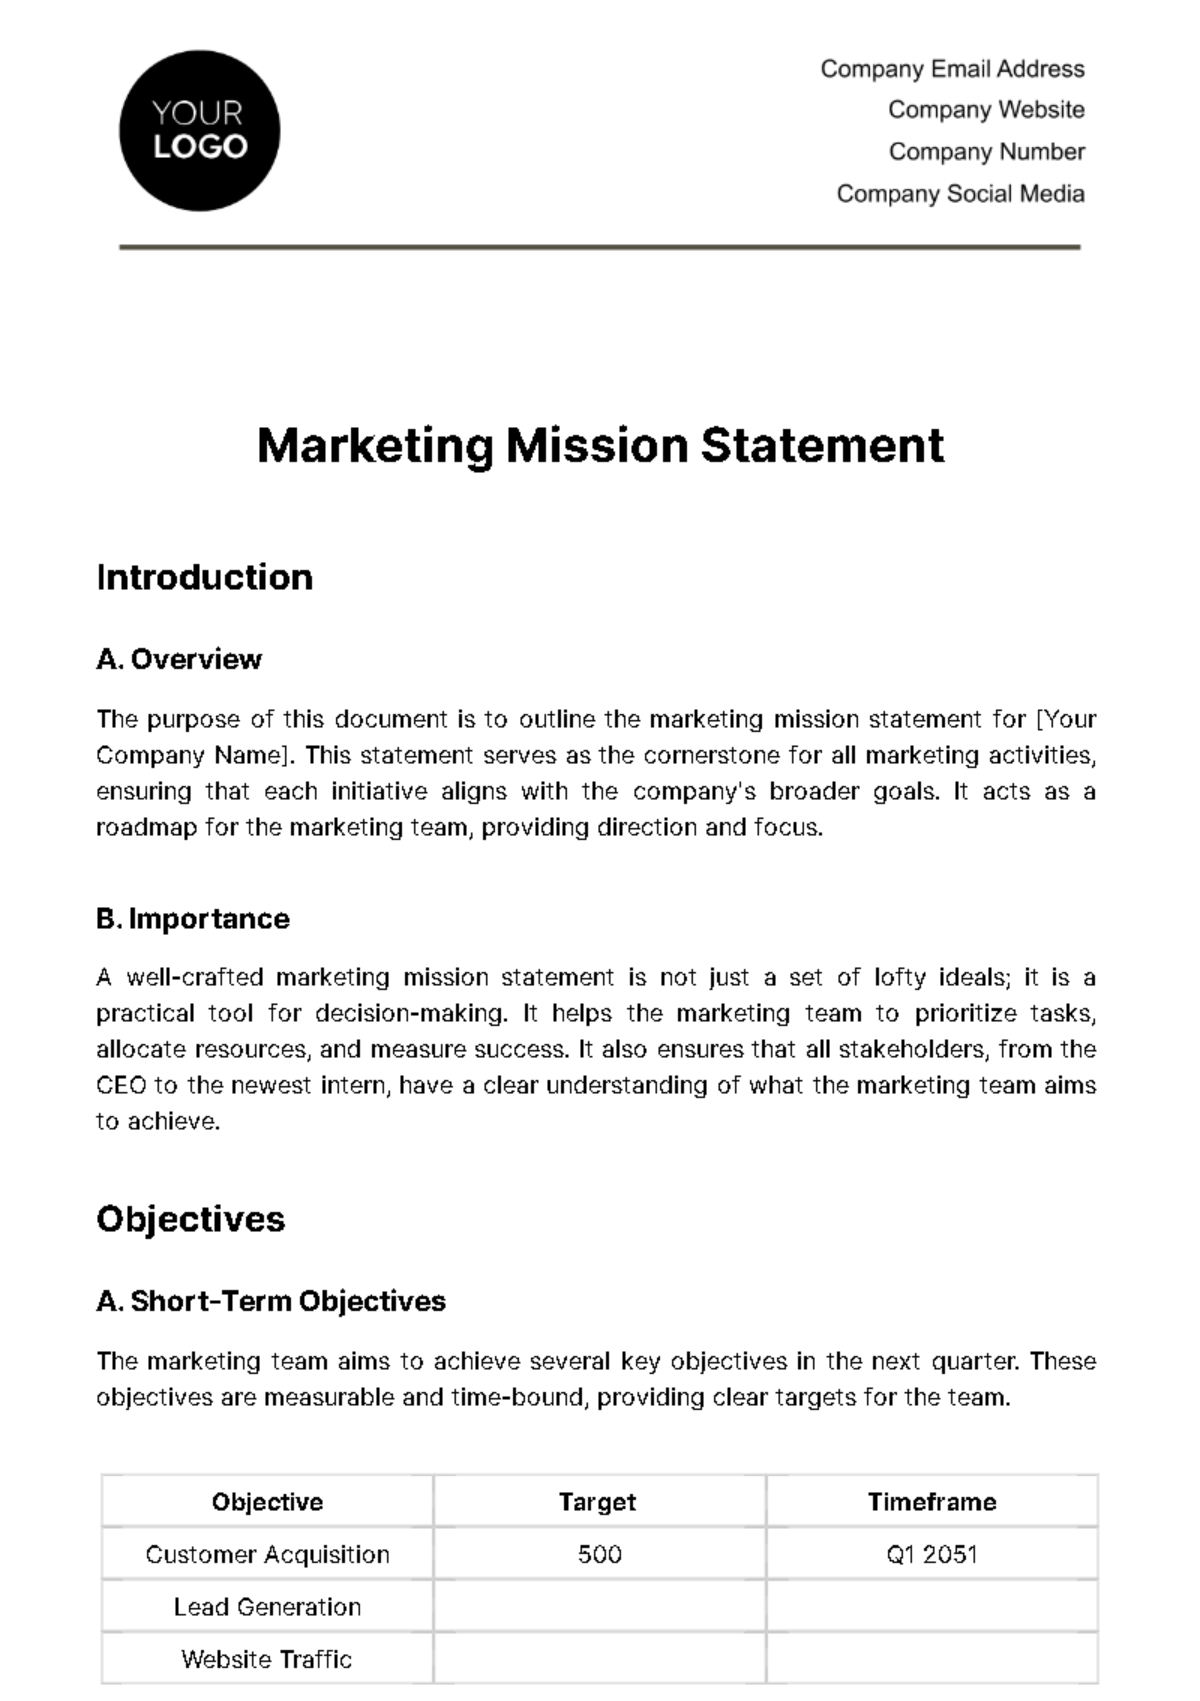 Marketing Mission Statement Template